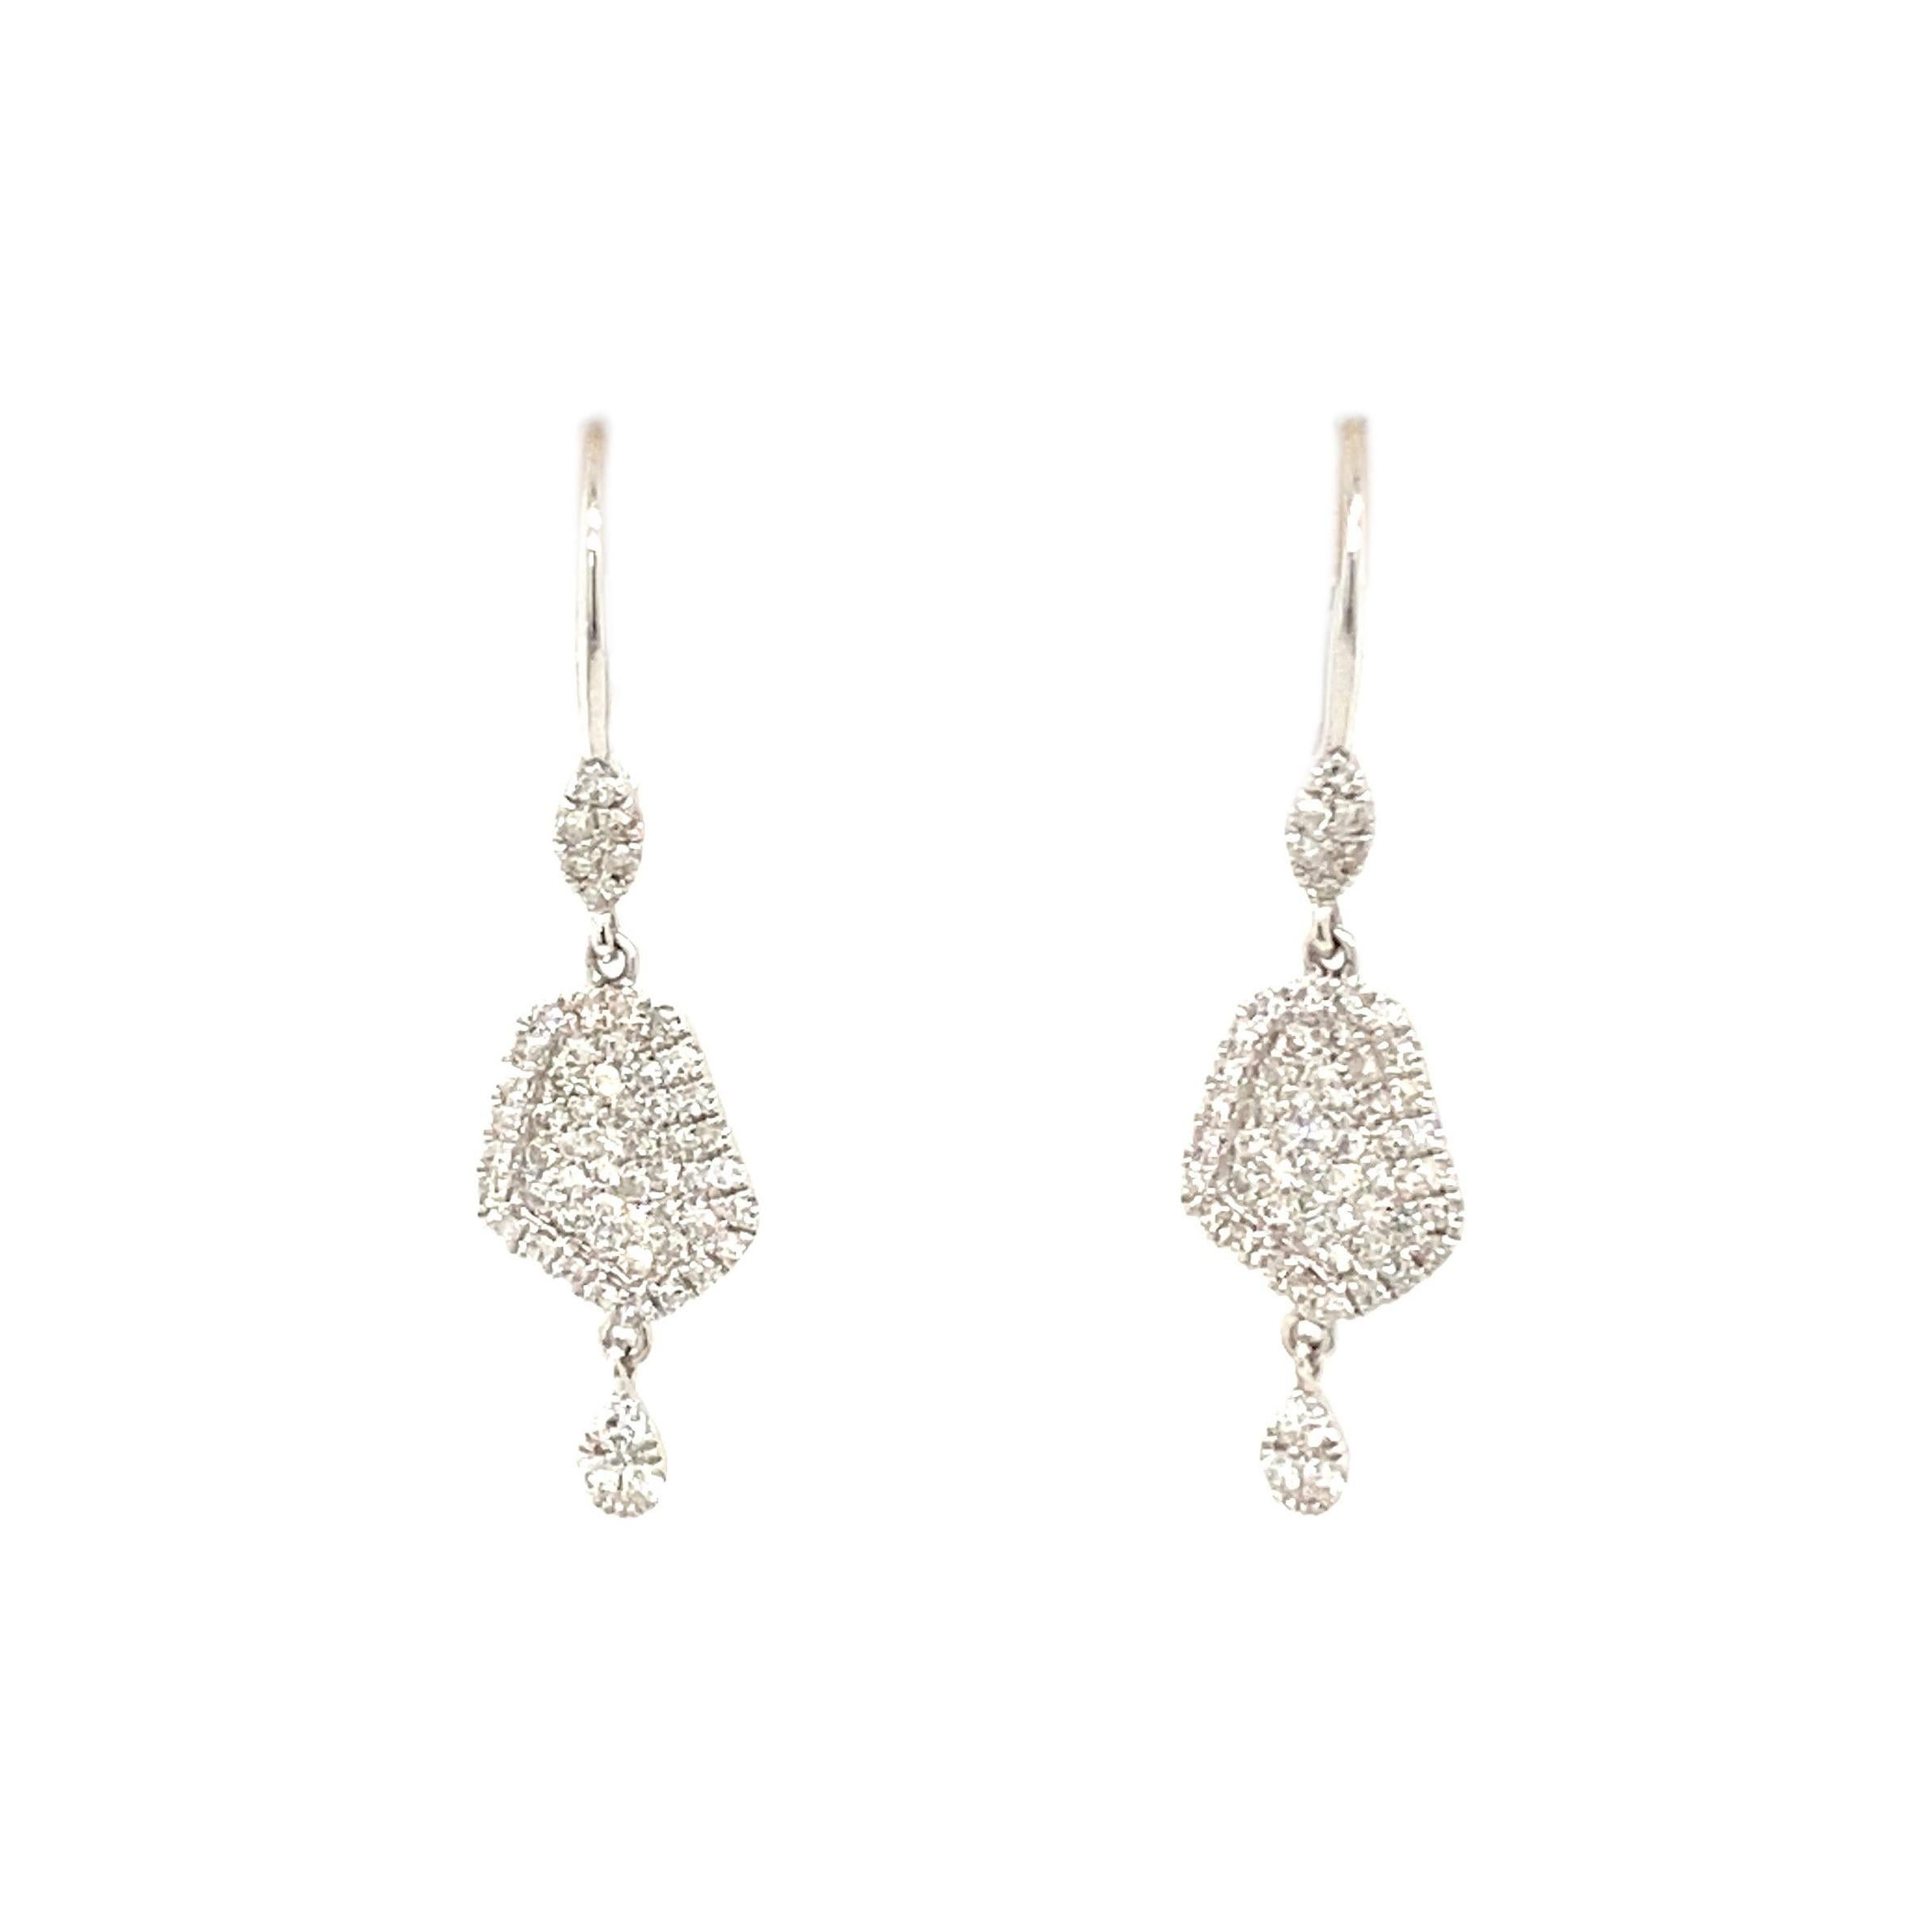 14 Karat White Gold Drop Earrings with Pave Diamonds